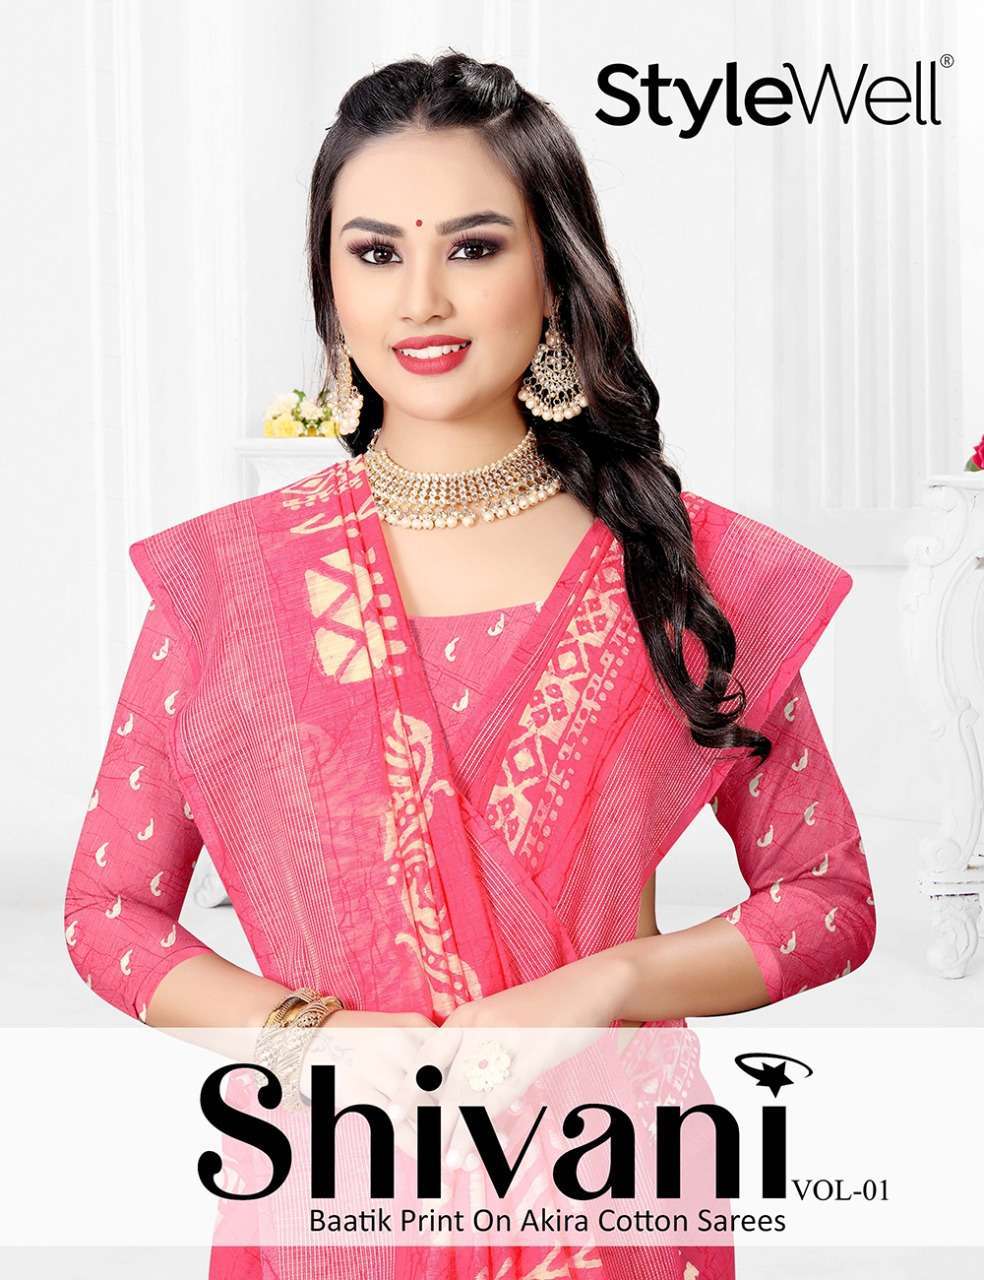 stylewell shivani vol 1 series 971-976 akira cotton saree